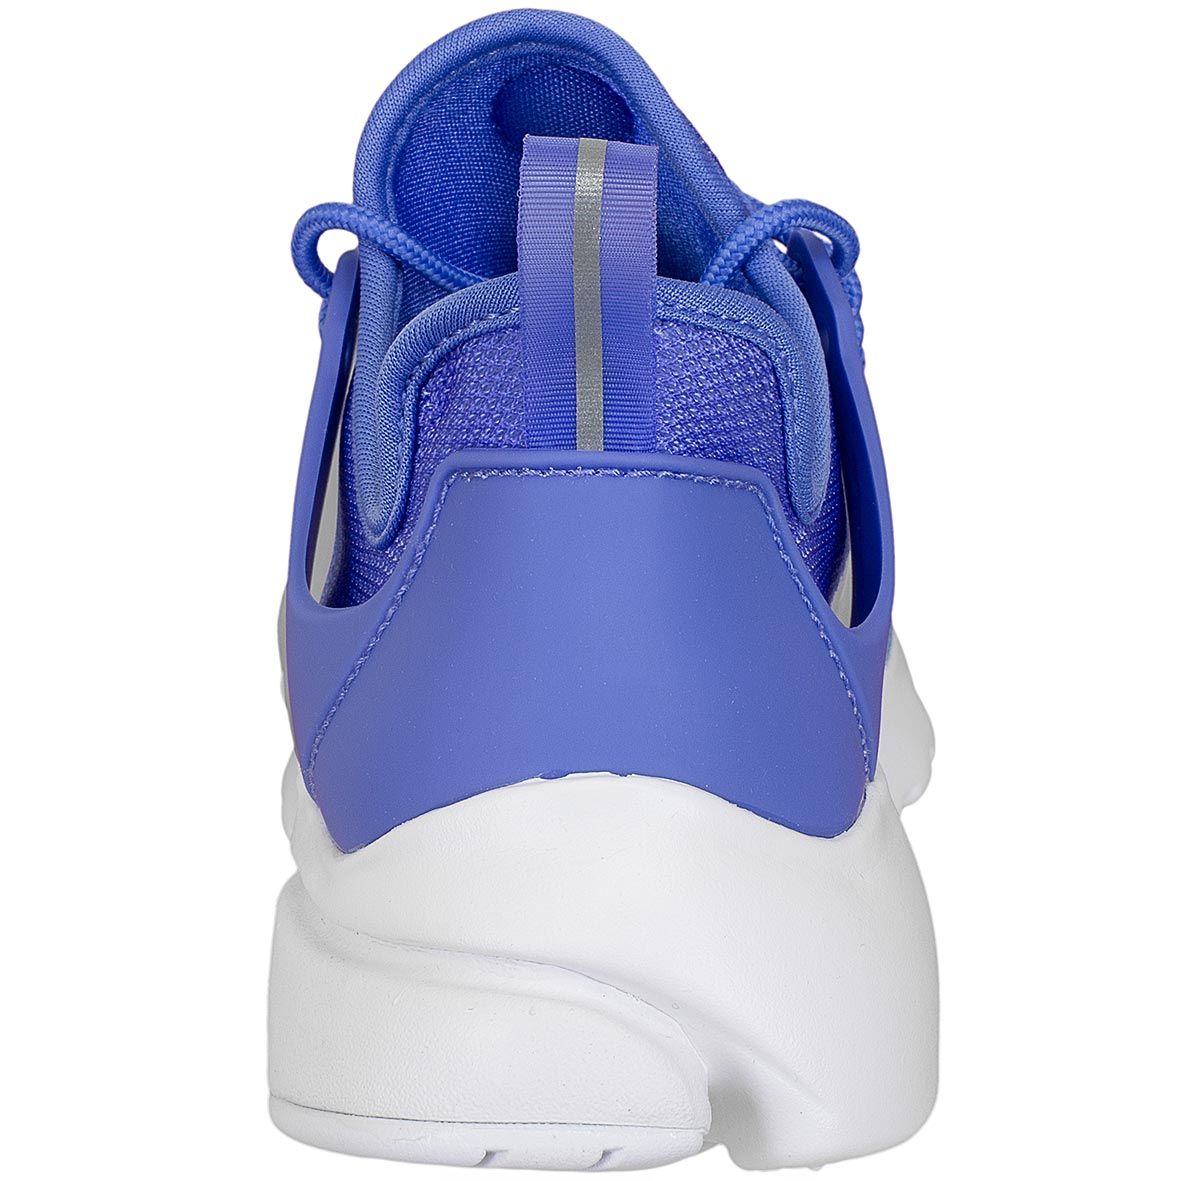 ☆ Nike Damen Sneaker Air Presto Ultra BR blau/weiß - hier bestellen!